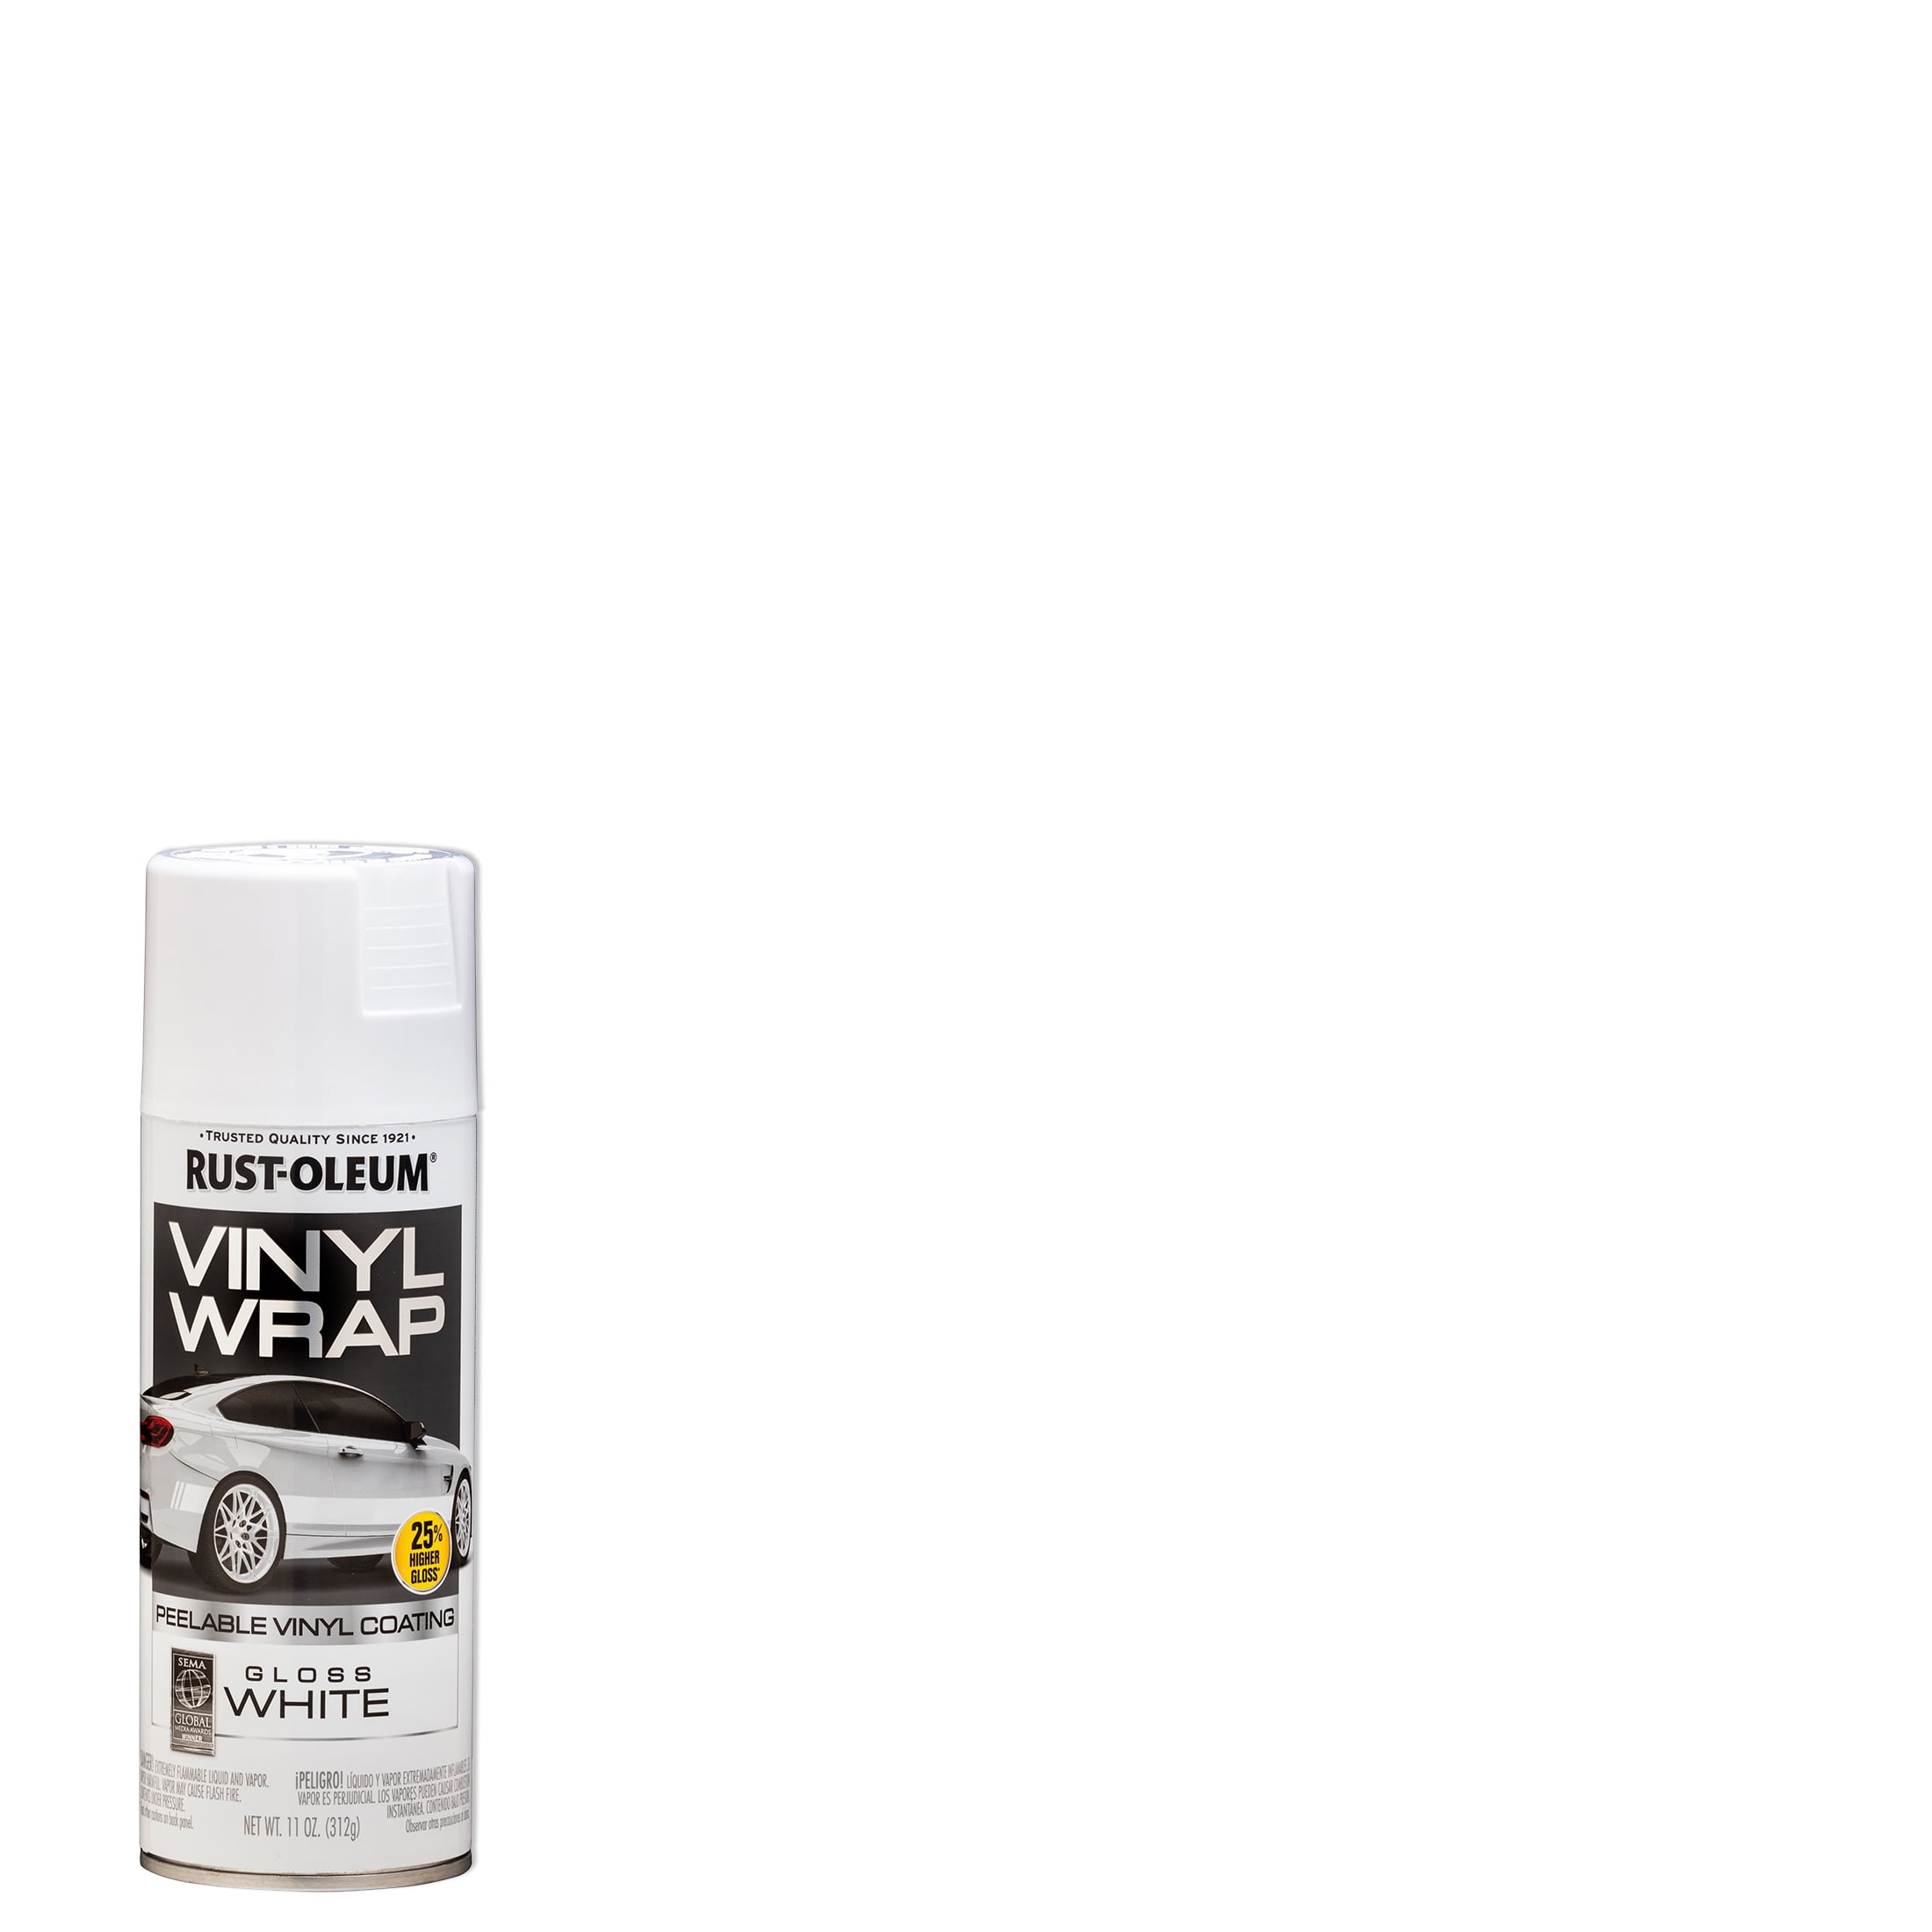 White, Rust-Oleum Automotive Vinyl Wrap Peelable Coating Gloss Spray Paint-352725, 11 oz